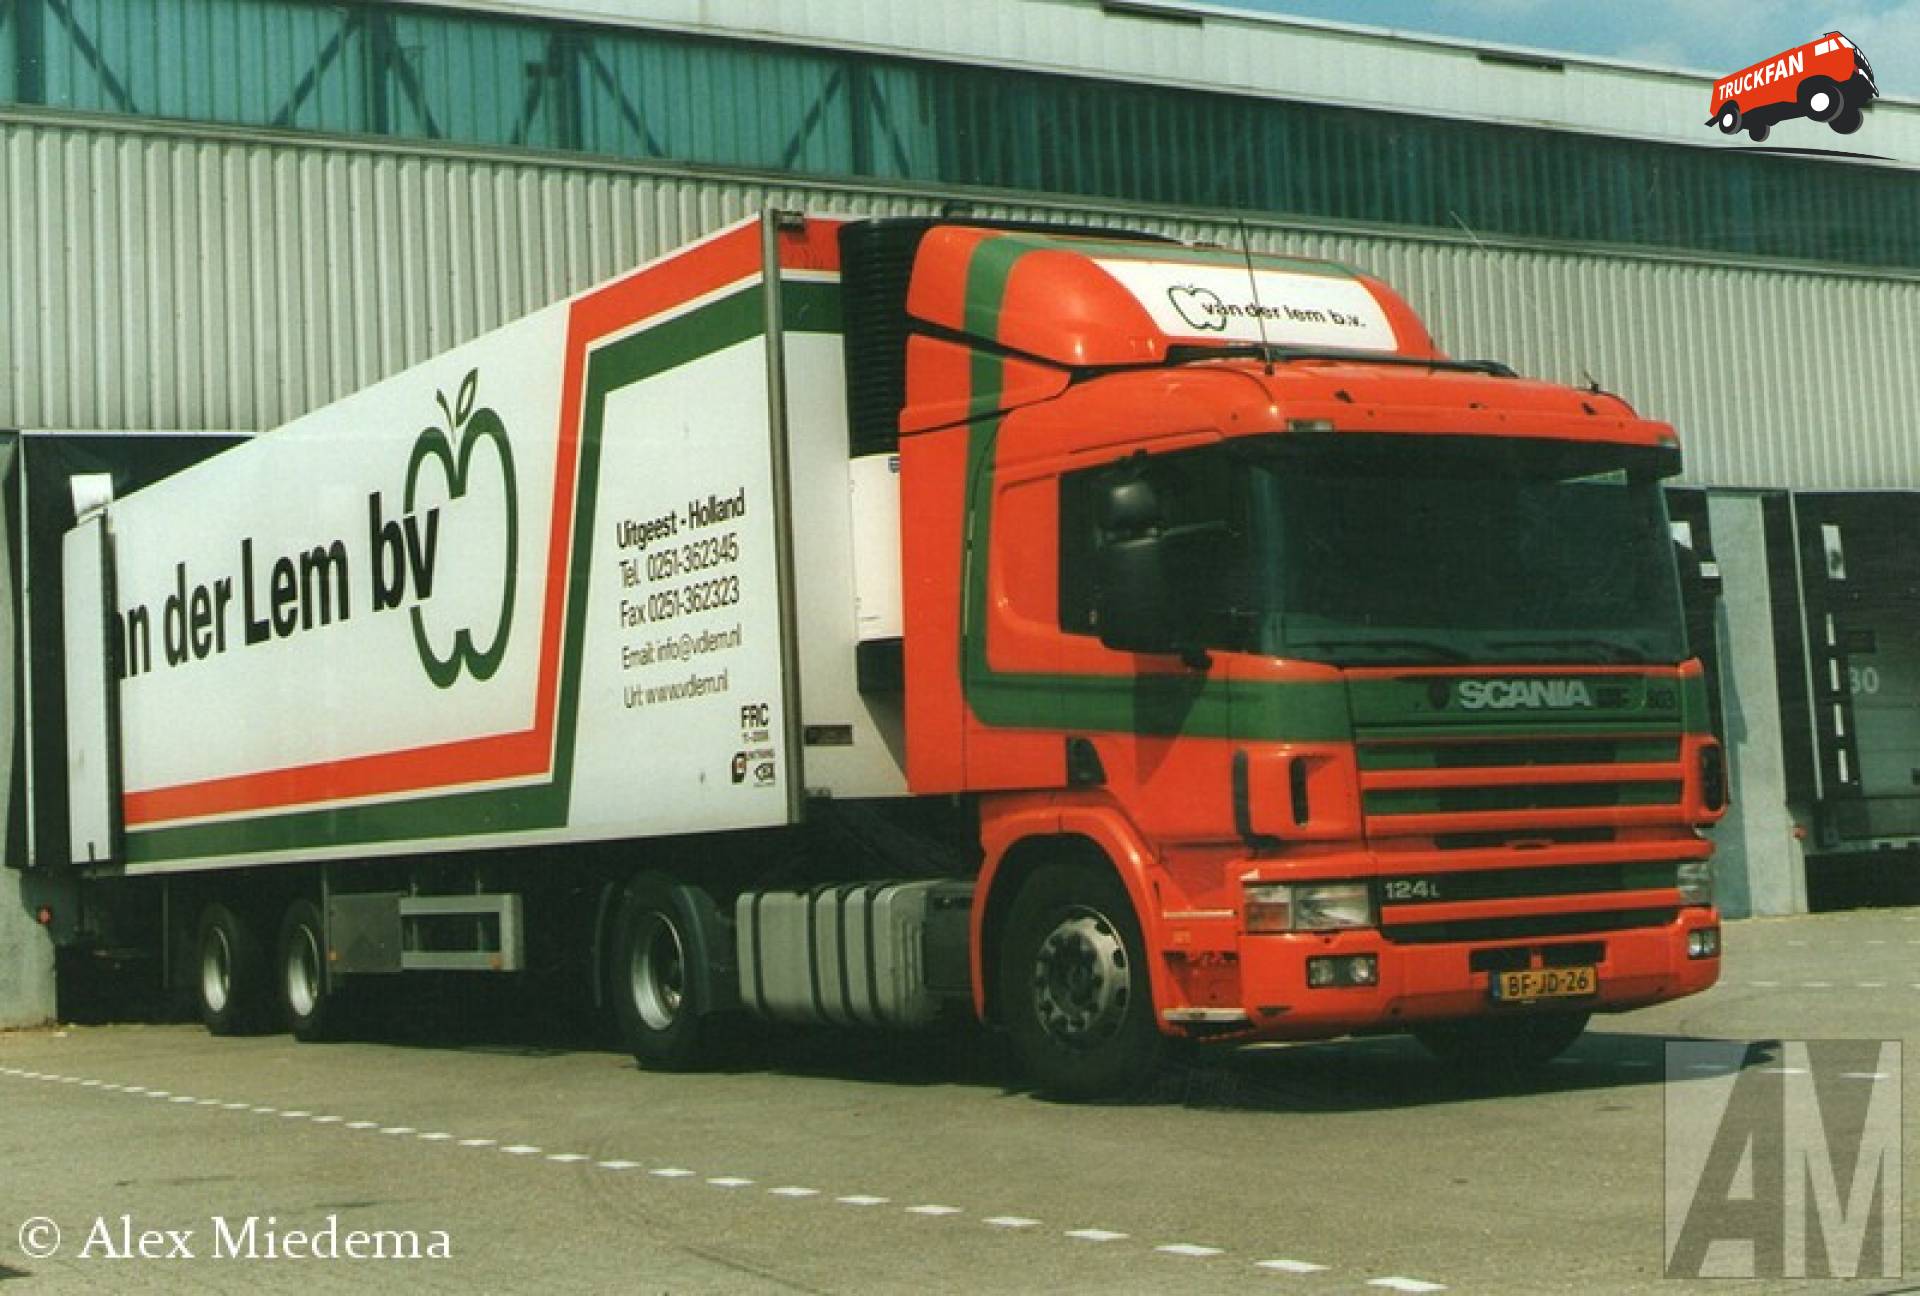 Scania 124